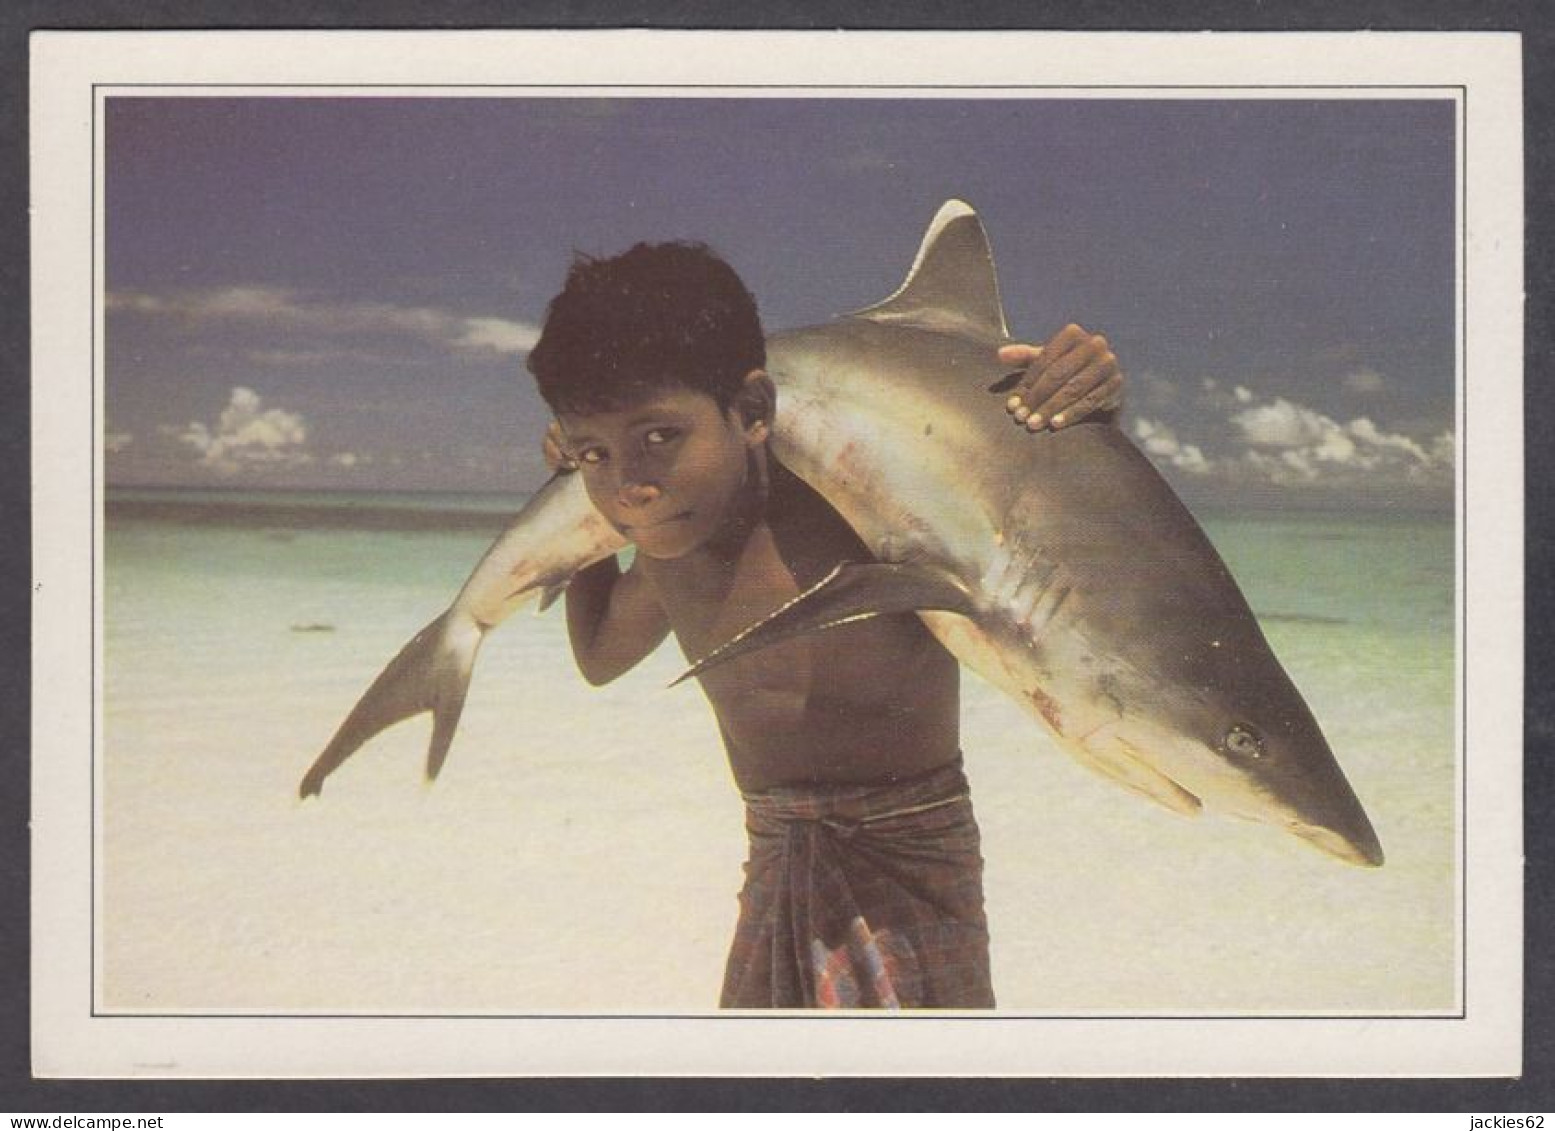 130004/ MALDIVES, Requin à Pointe Blanche - Geographie